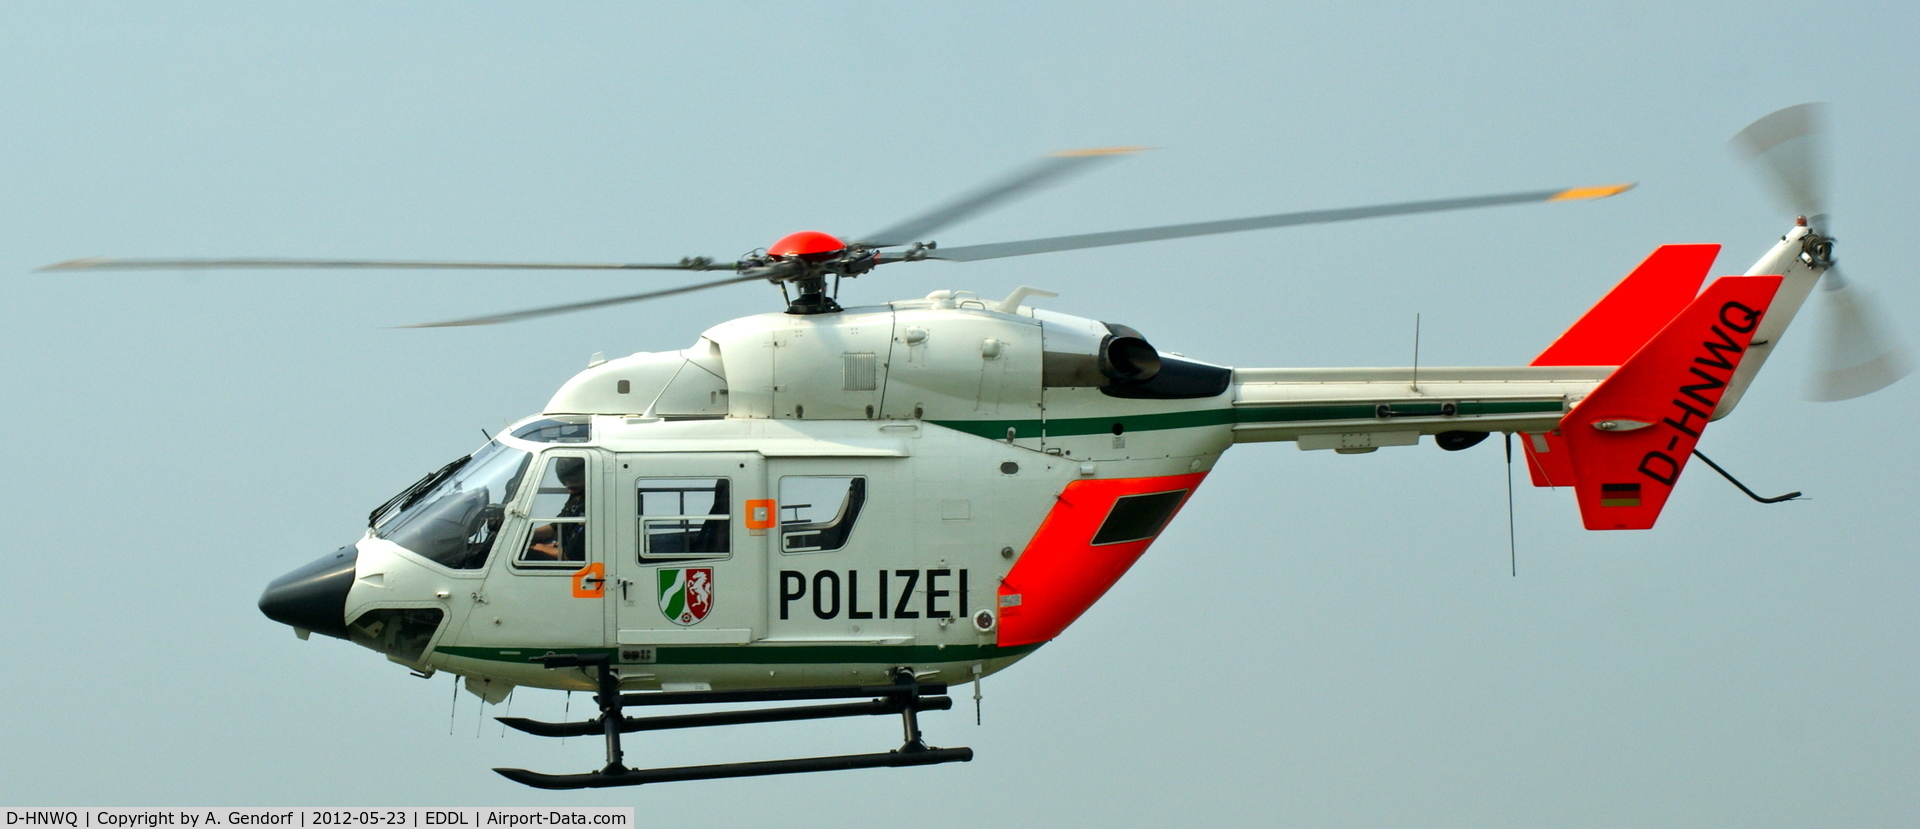 D-HNWQ, 2004 Eurocopter-Kawasaki BK-117C-1 C/N 7554, Polizei, seen here coming back to its homebase at Düsseldorf Int´l (EDDL)